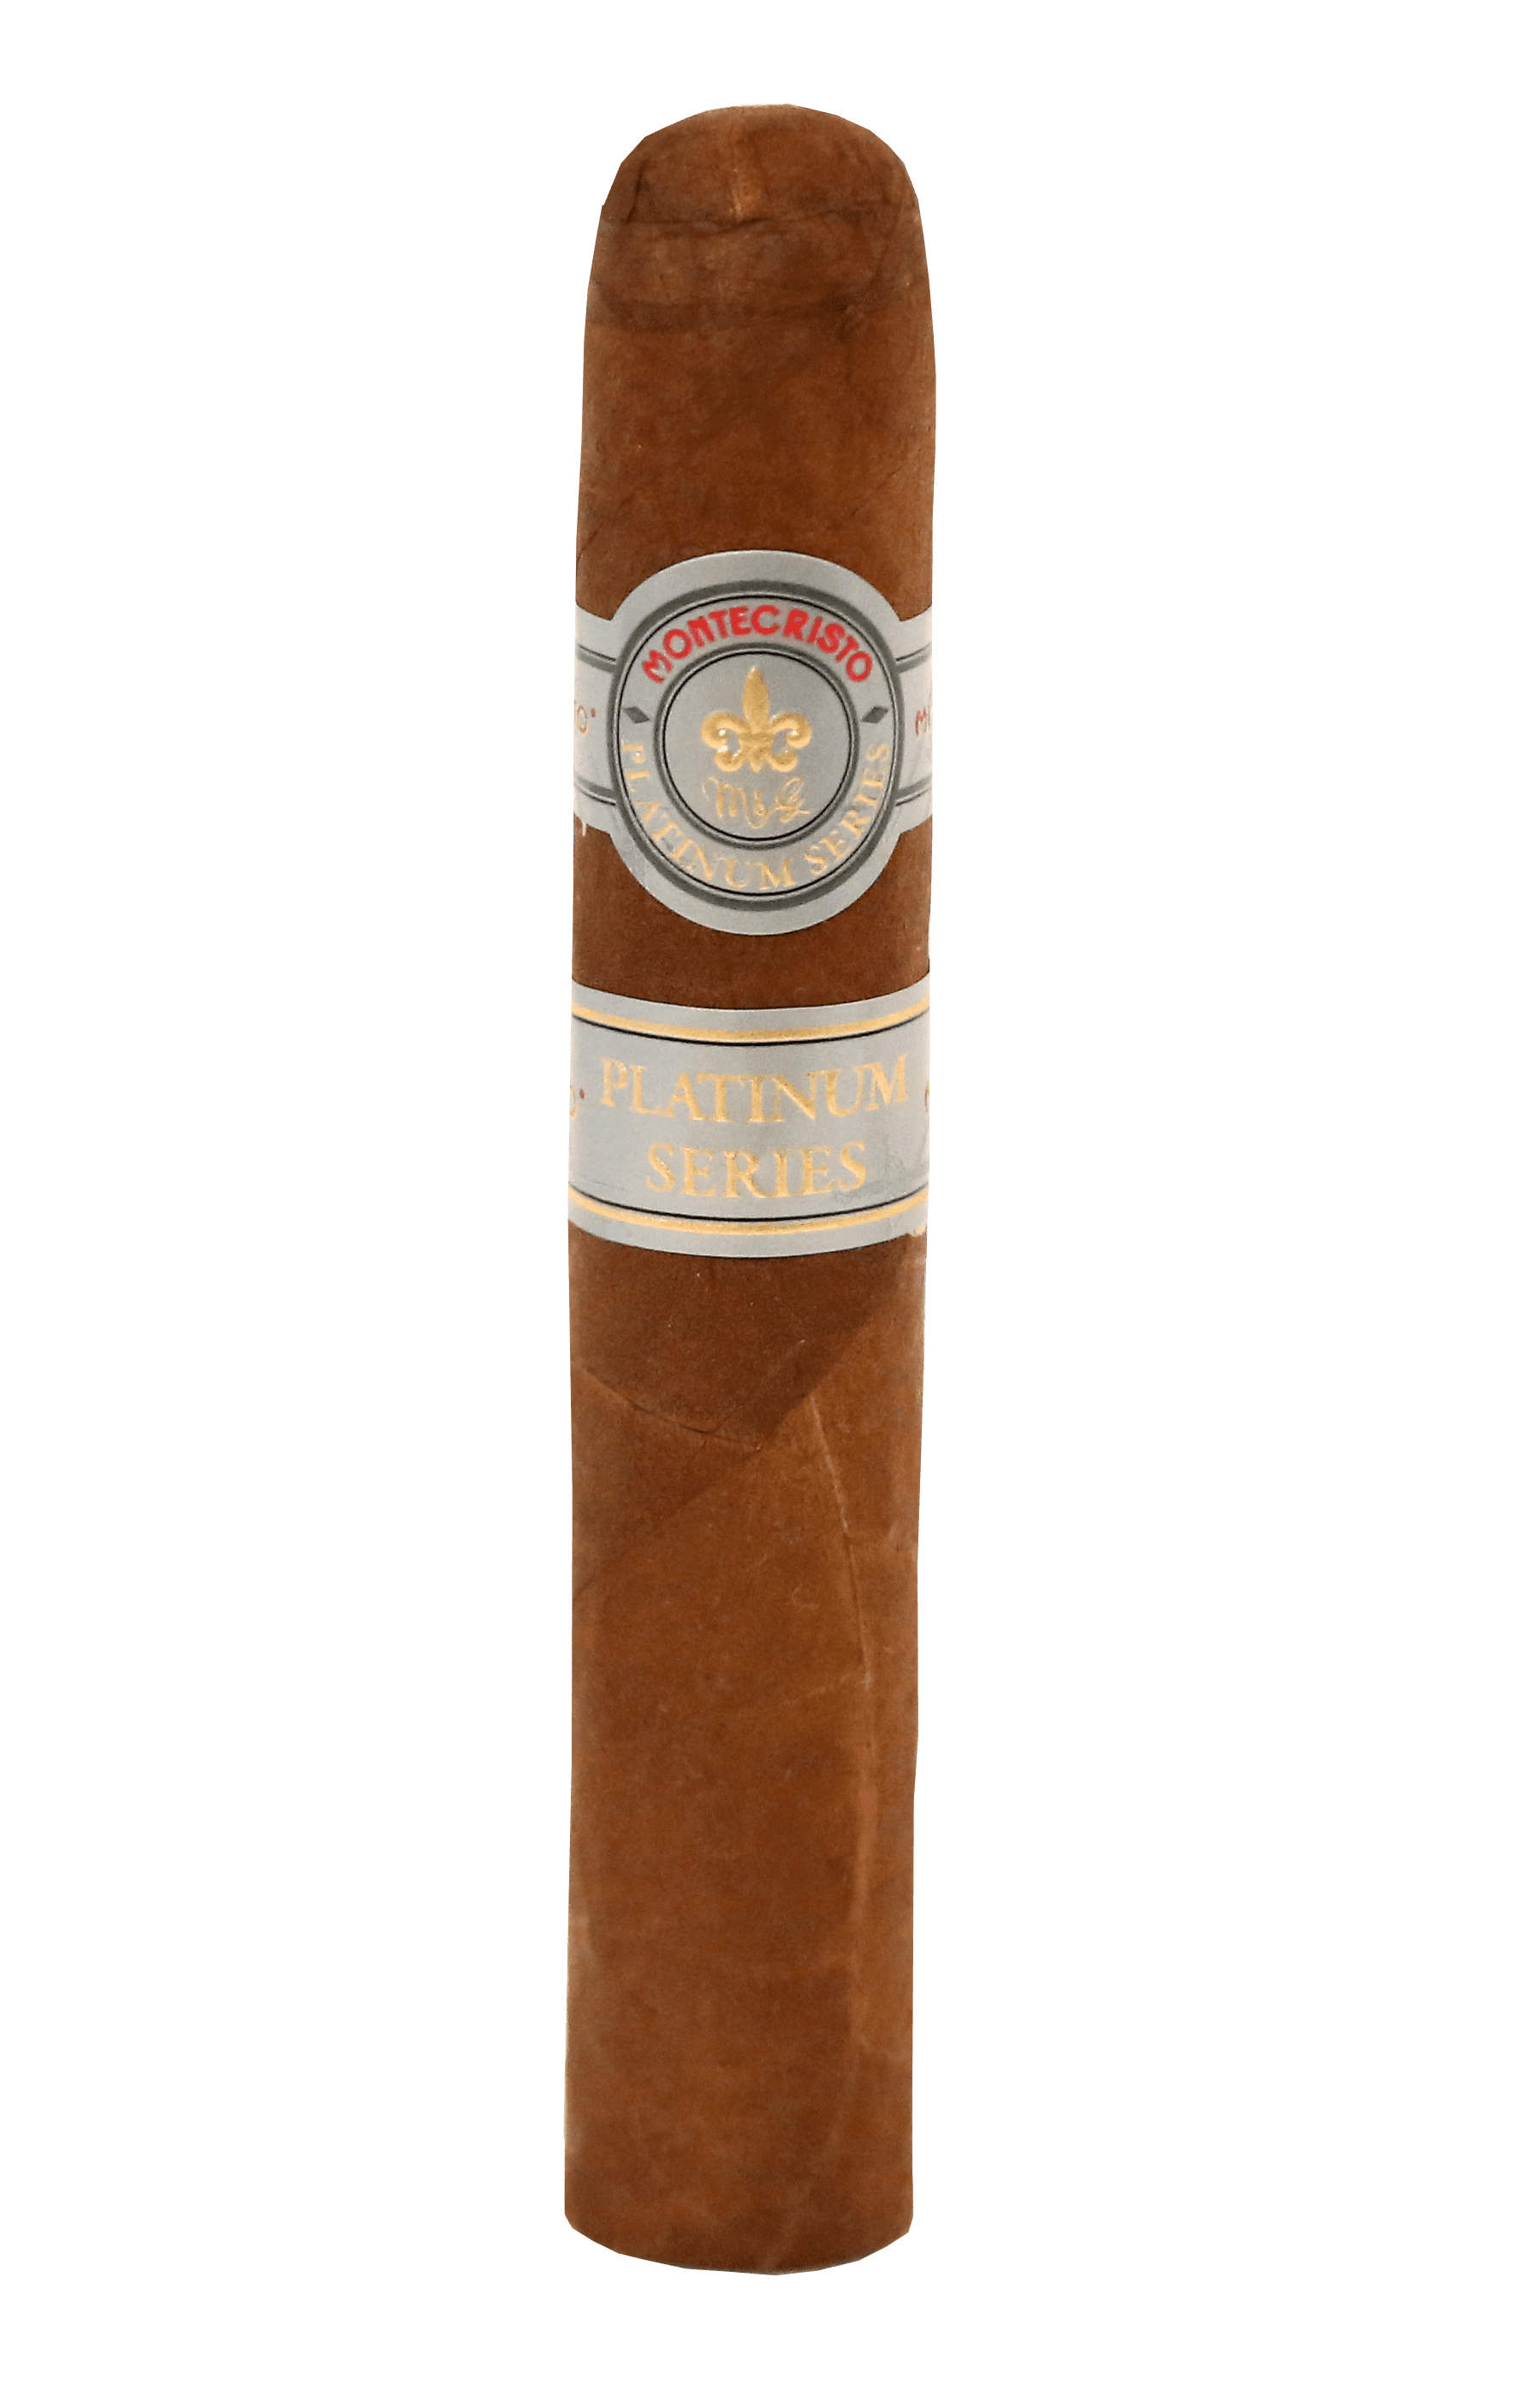 Single Montecristo Platinum Series Rothchilde Tube cigar